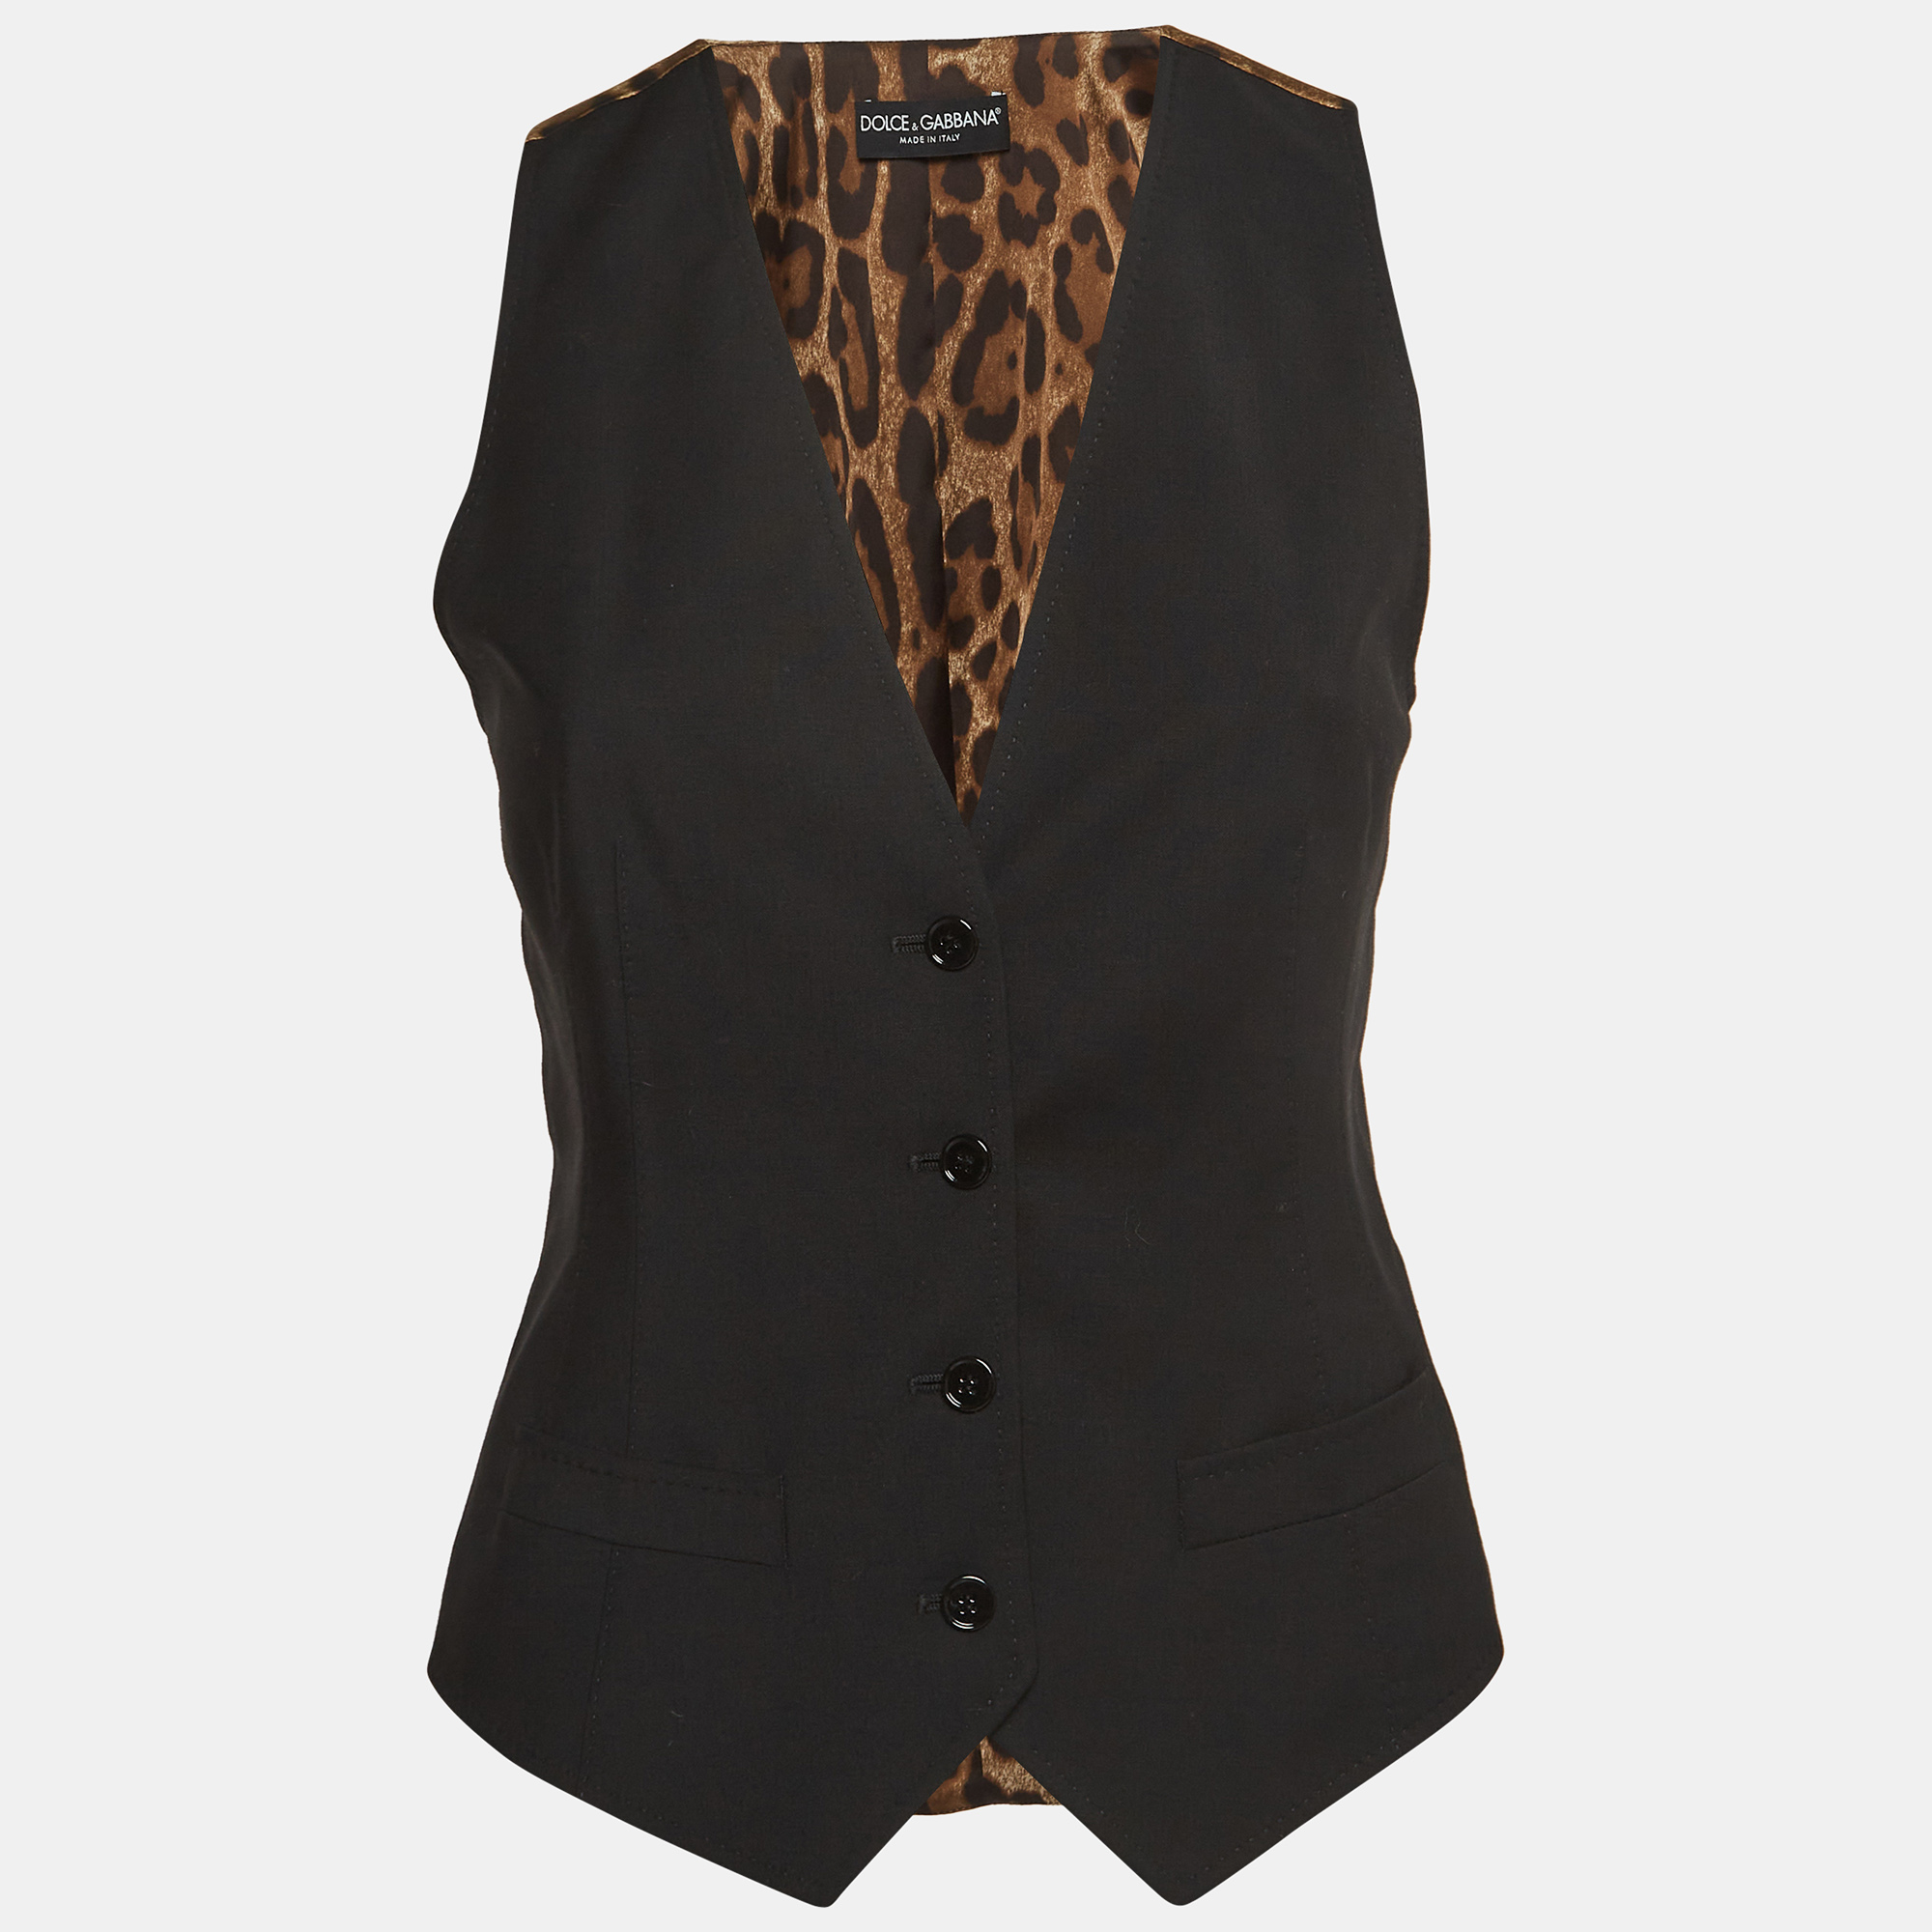 Dolce & Gabbana Black Leopard Print Cotton and Satin Vest S